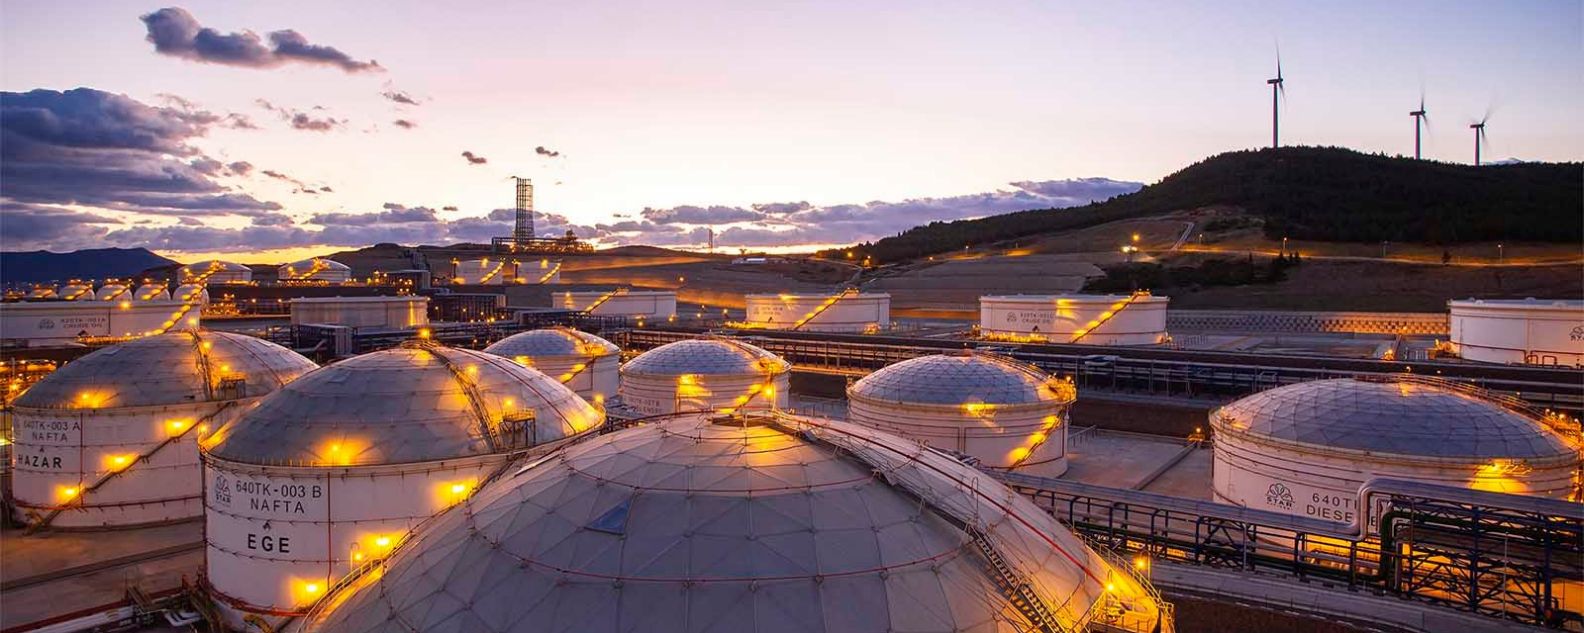 Spherical tanks at oil refinery in Turkey